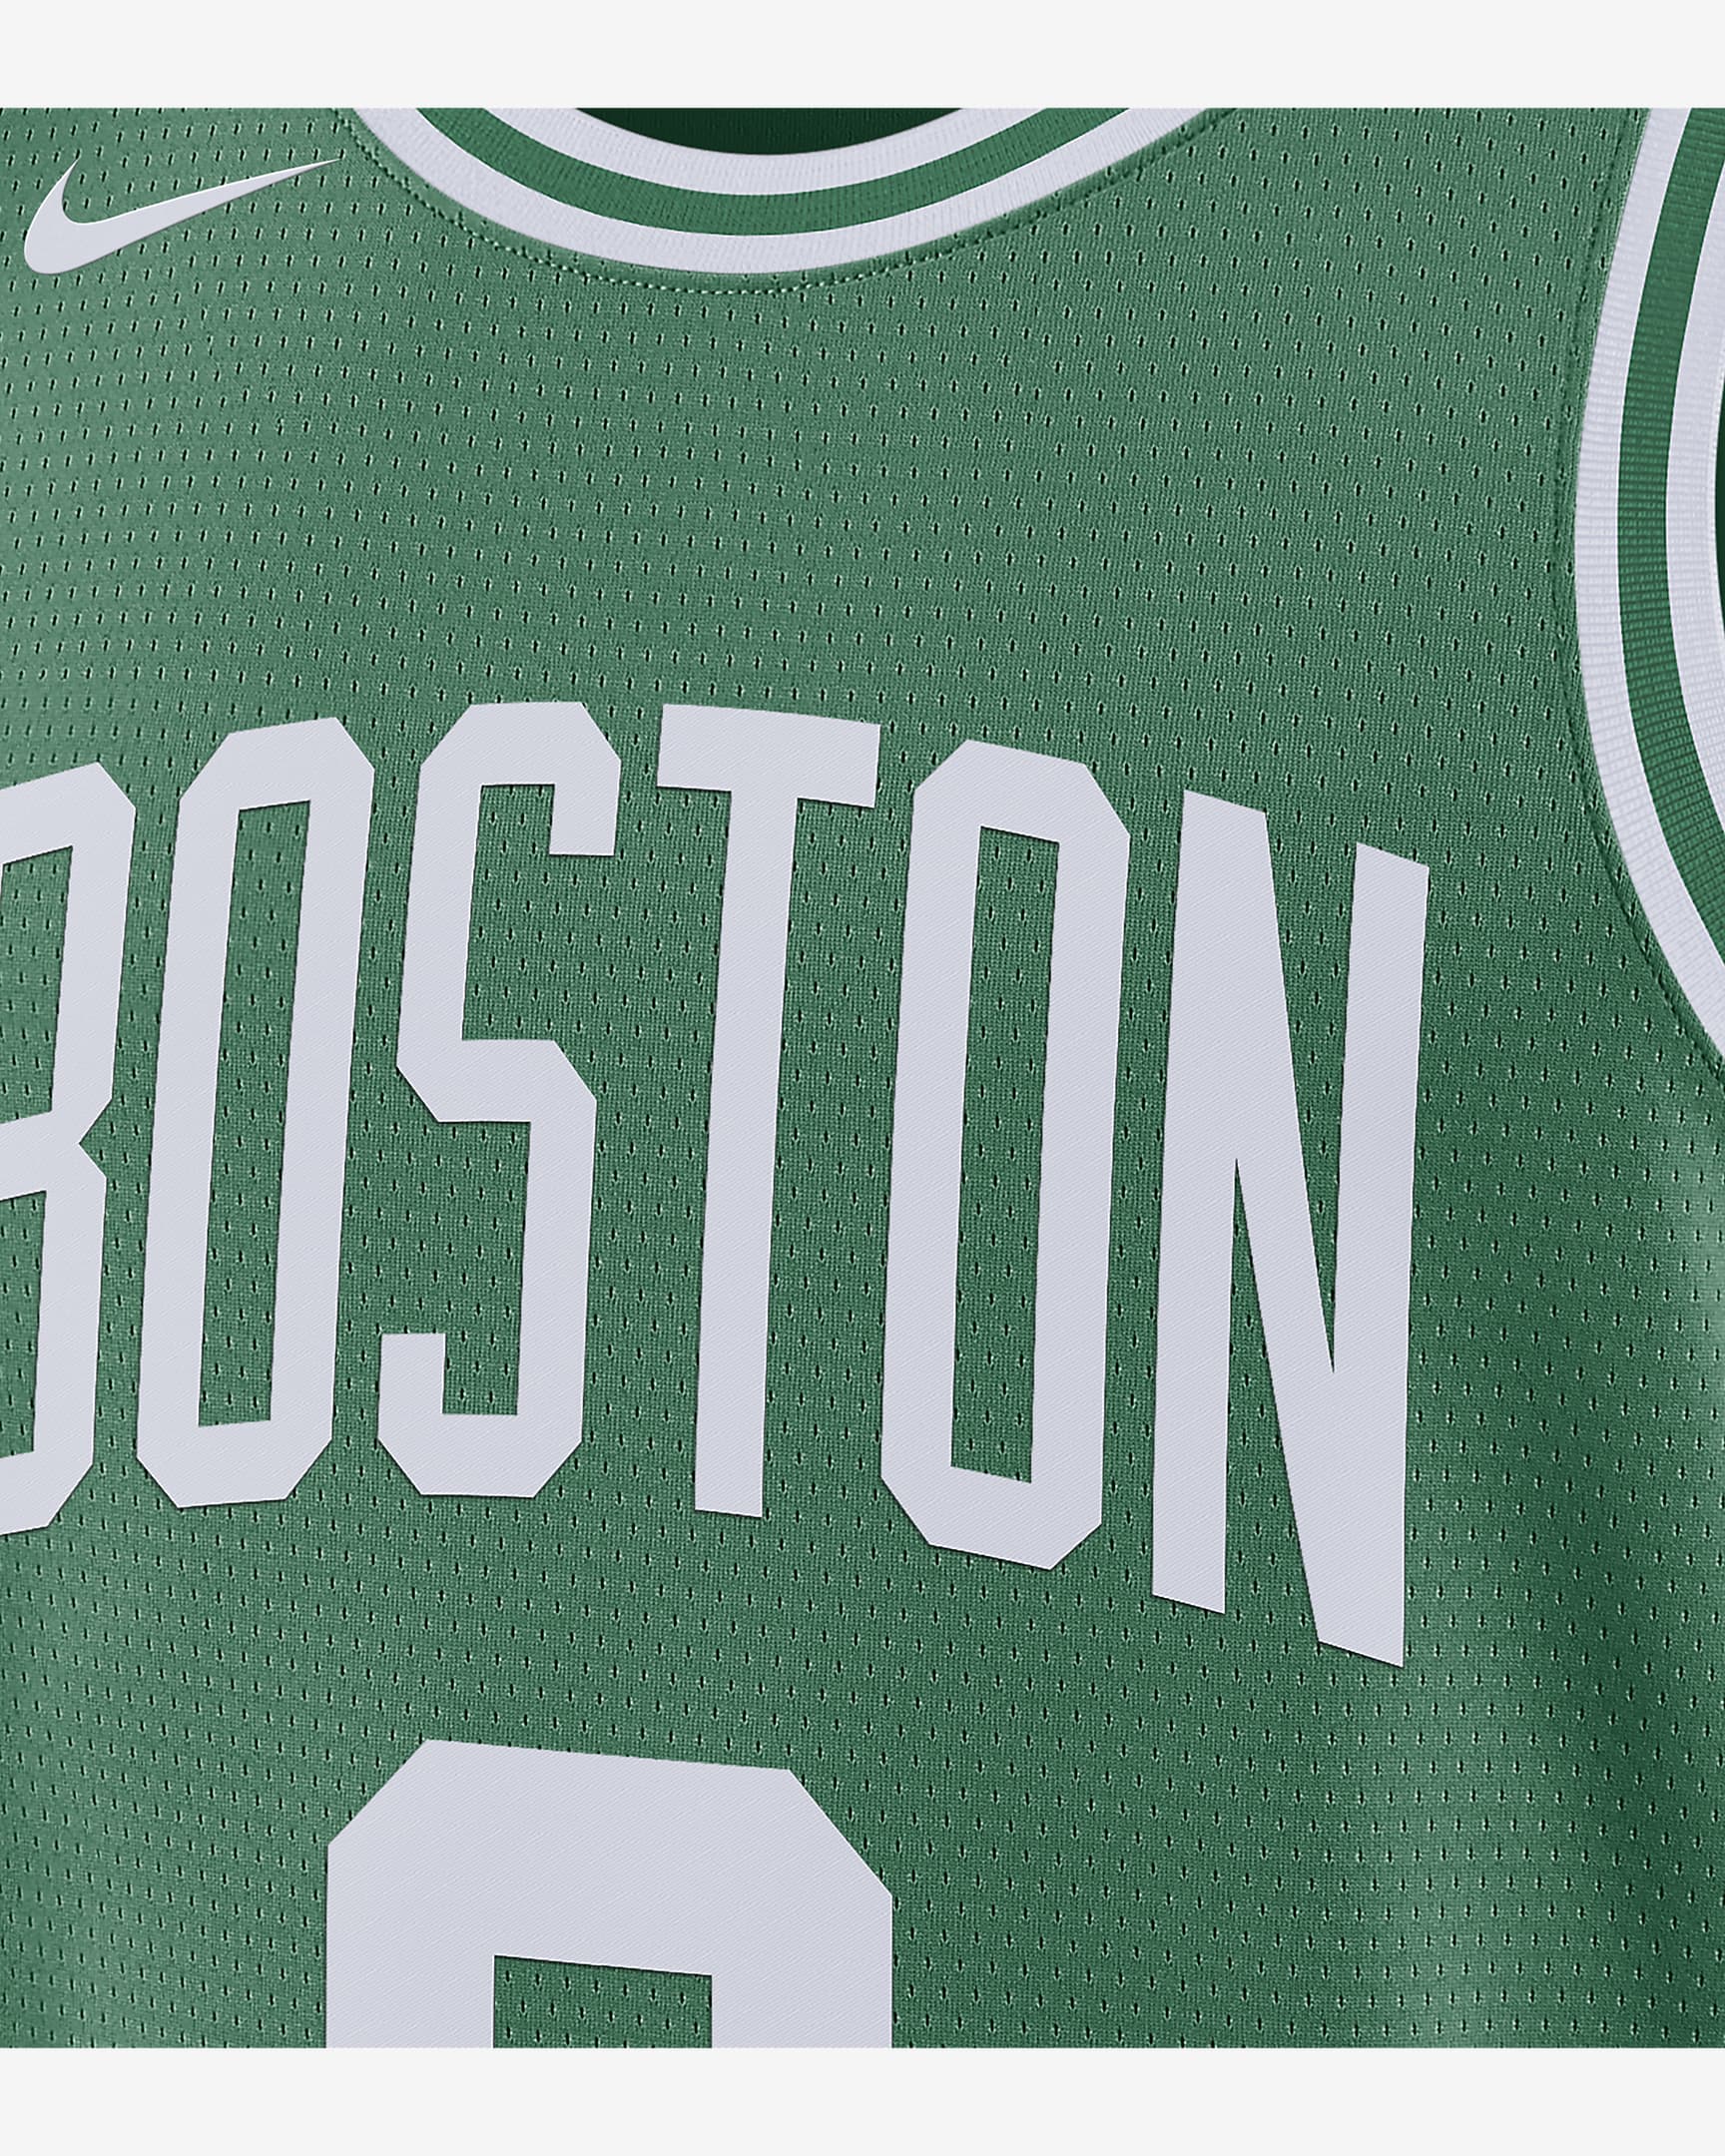 Boston Celtics Icon Edition 2022/23 Men's Nike Dri-FIT NBA Swingman Jersey - Clover